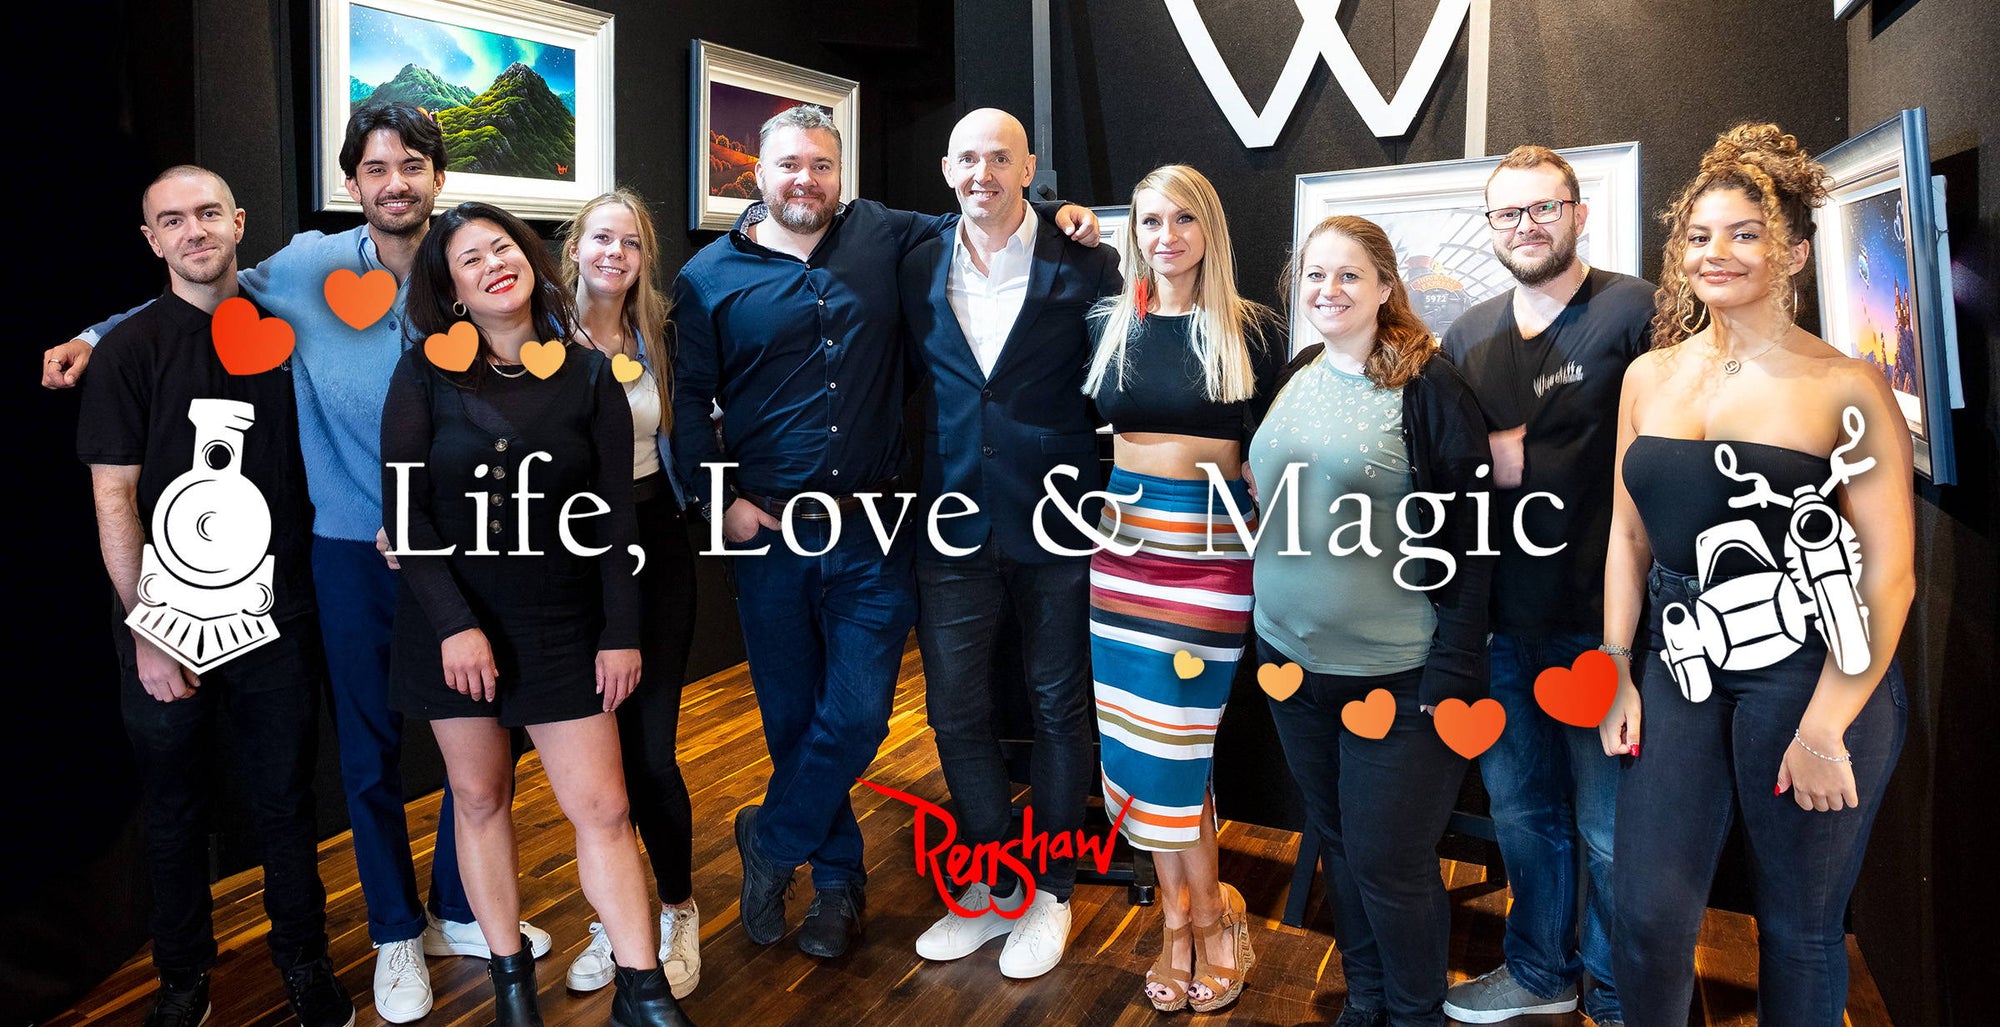 The Life, Love & Magic Exhibition